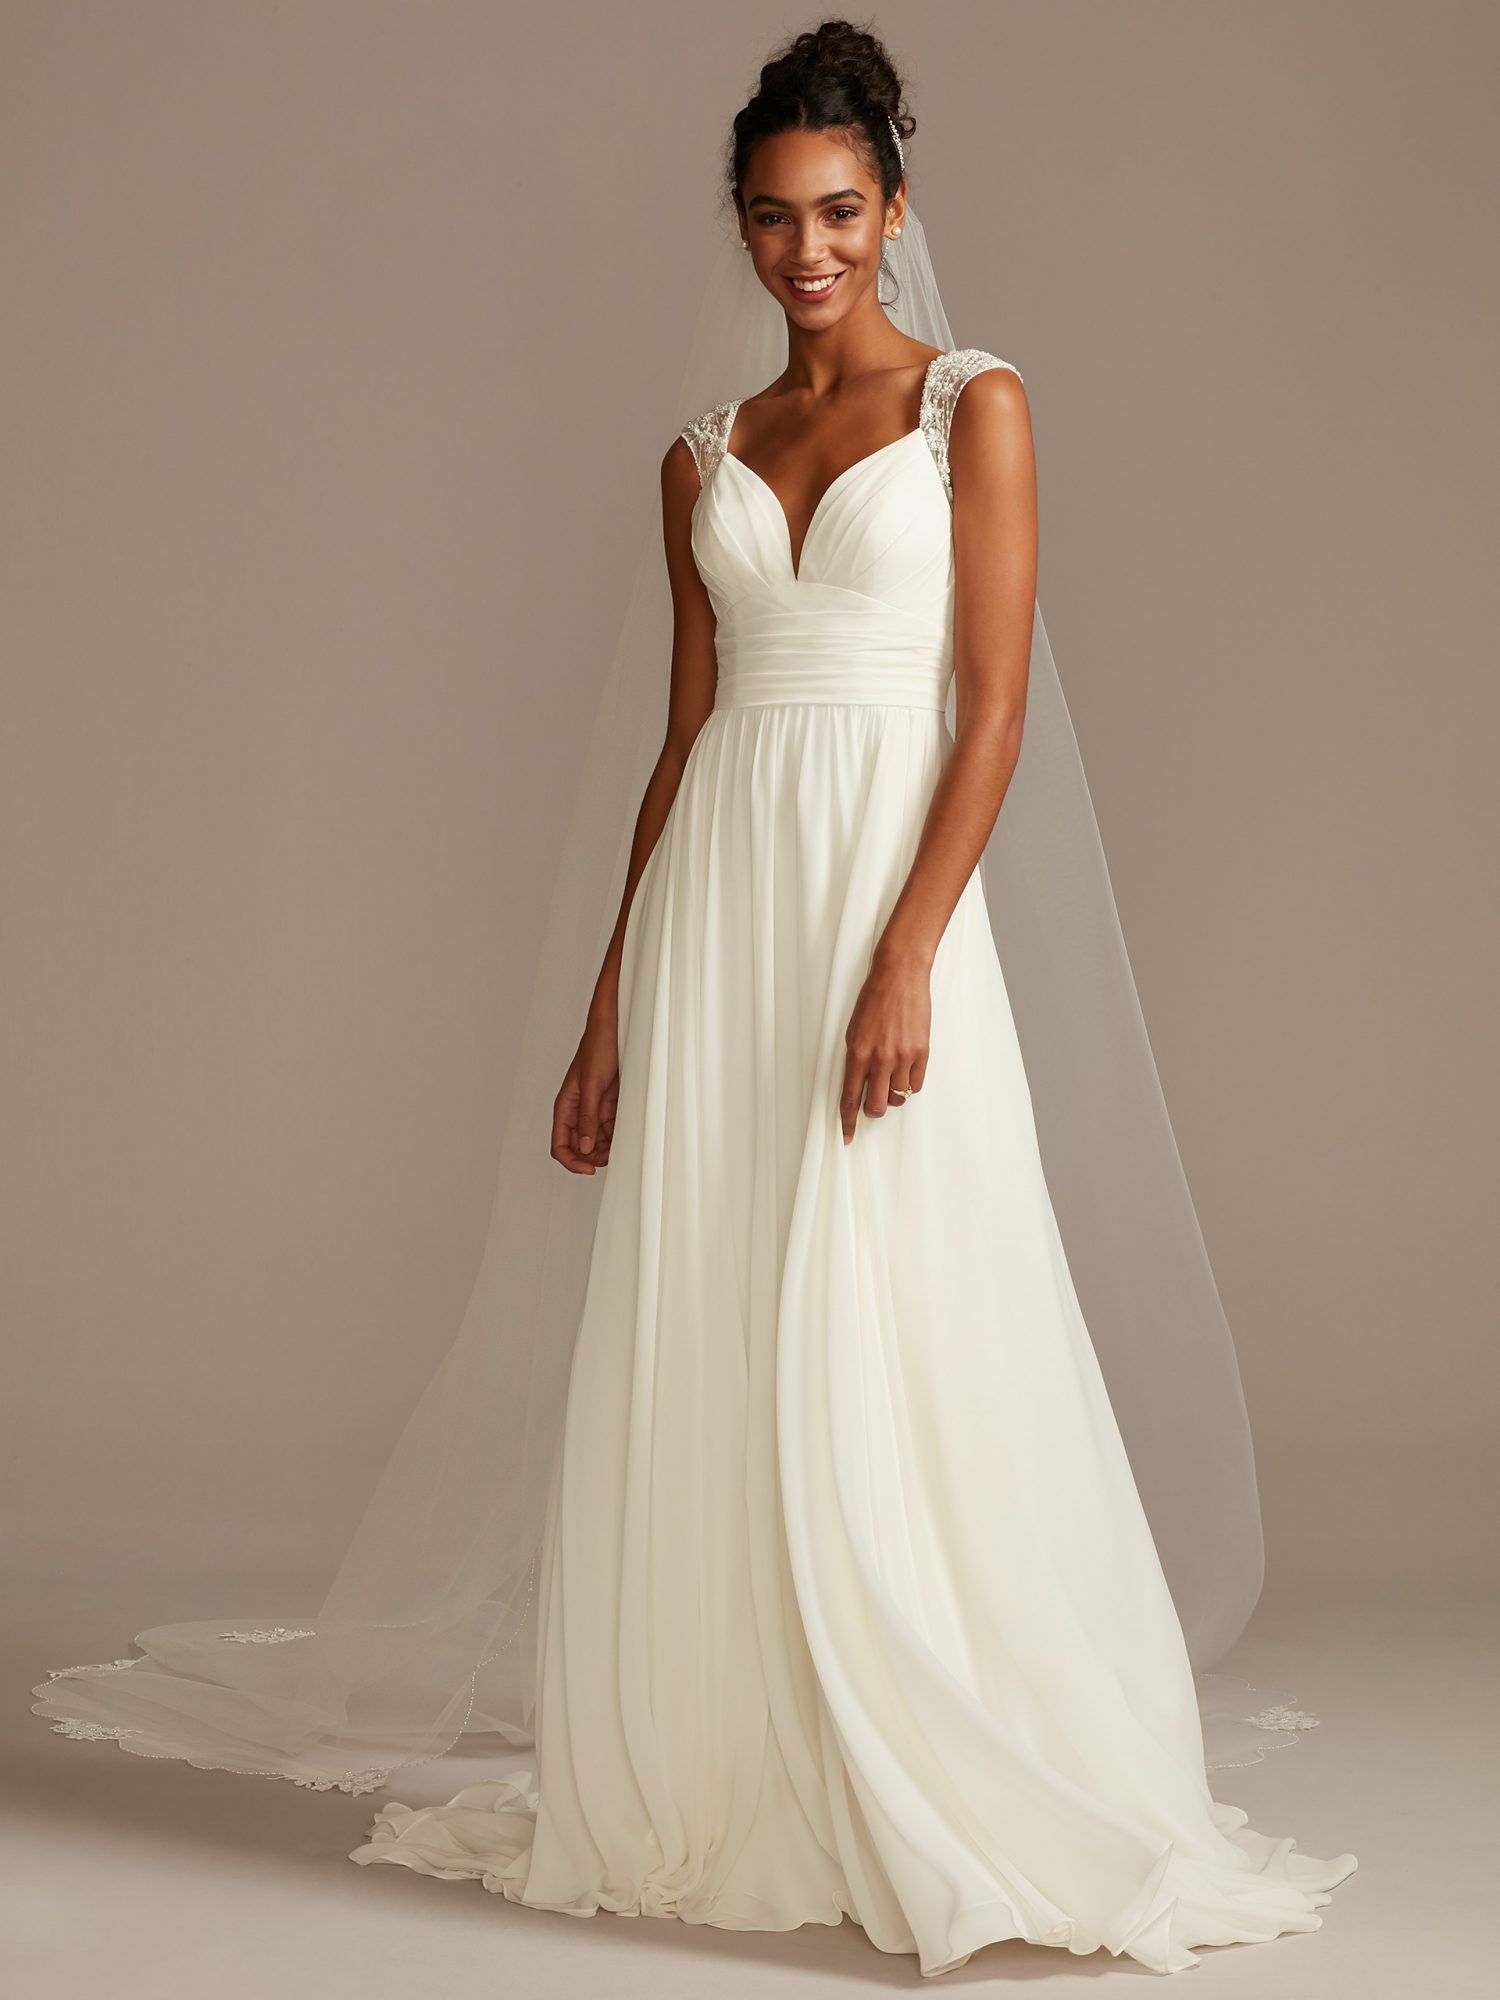 David's Bridal Fall 2020 Wedding Dress ...